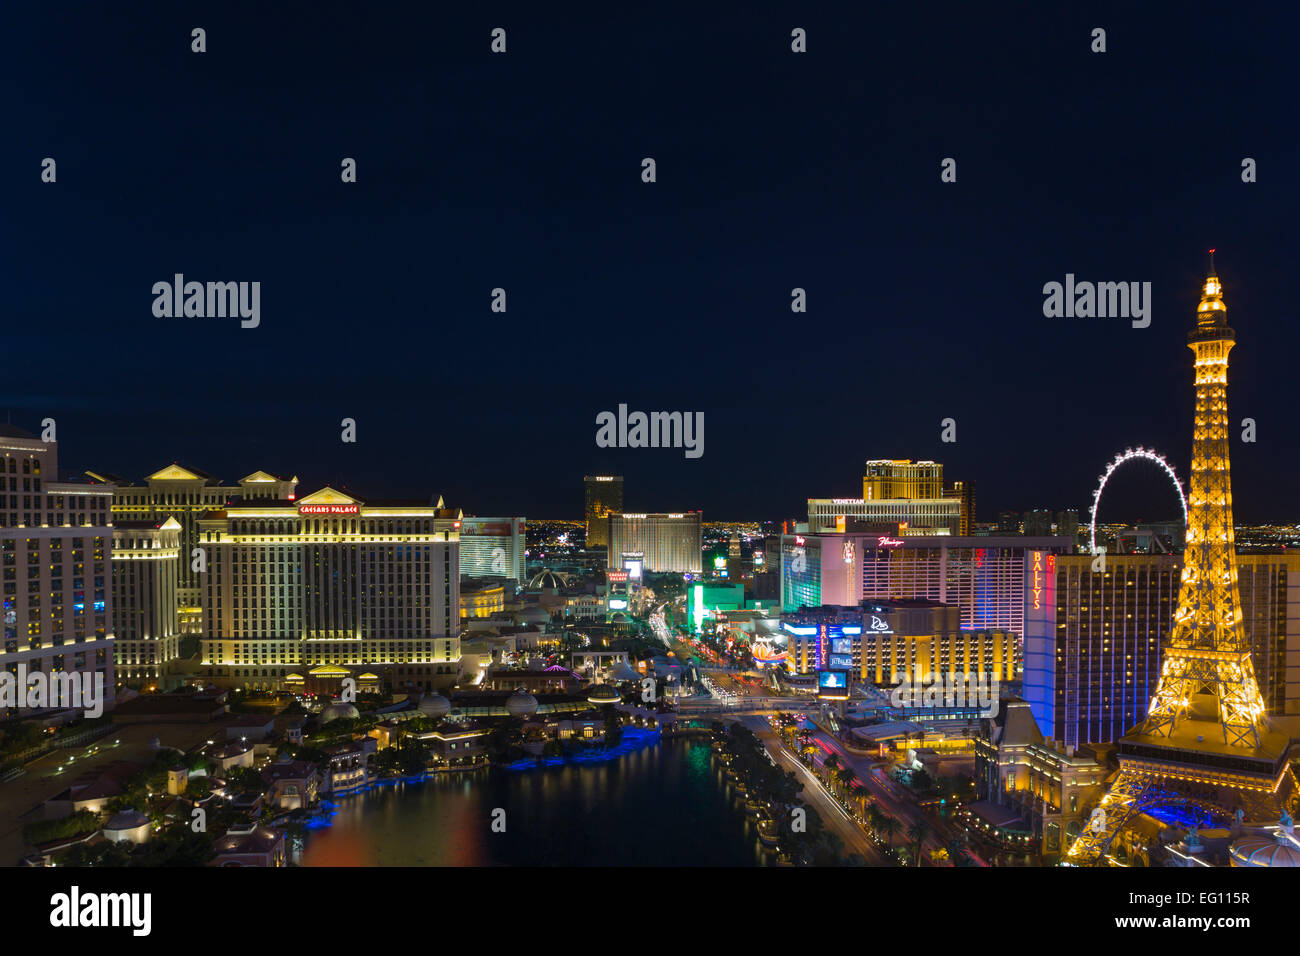 Eiffel Tower of Paris Hotel in Las Vegas Editorial Stock Image - Image of  luxury, casino: 22069414